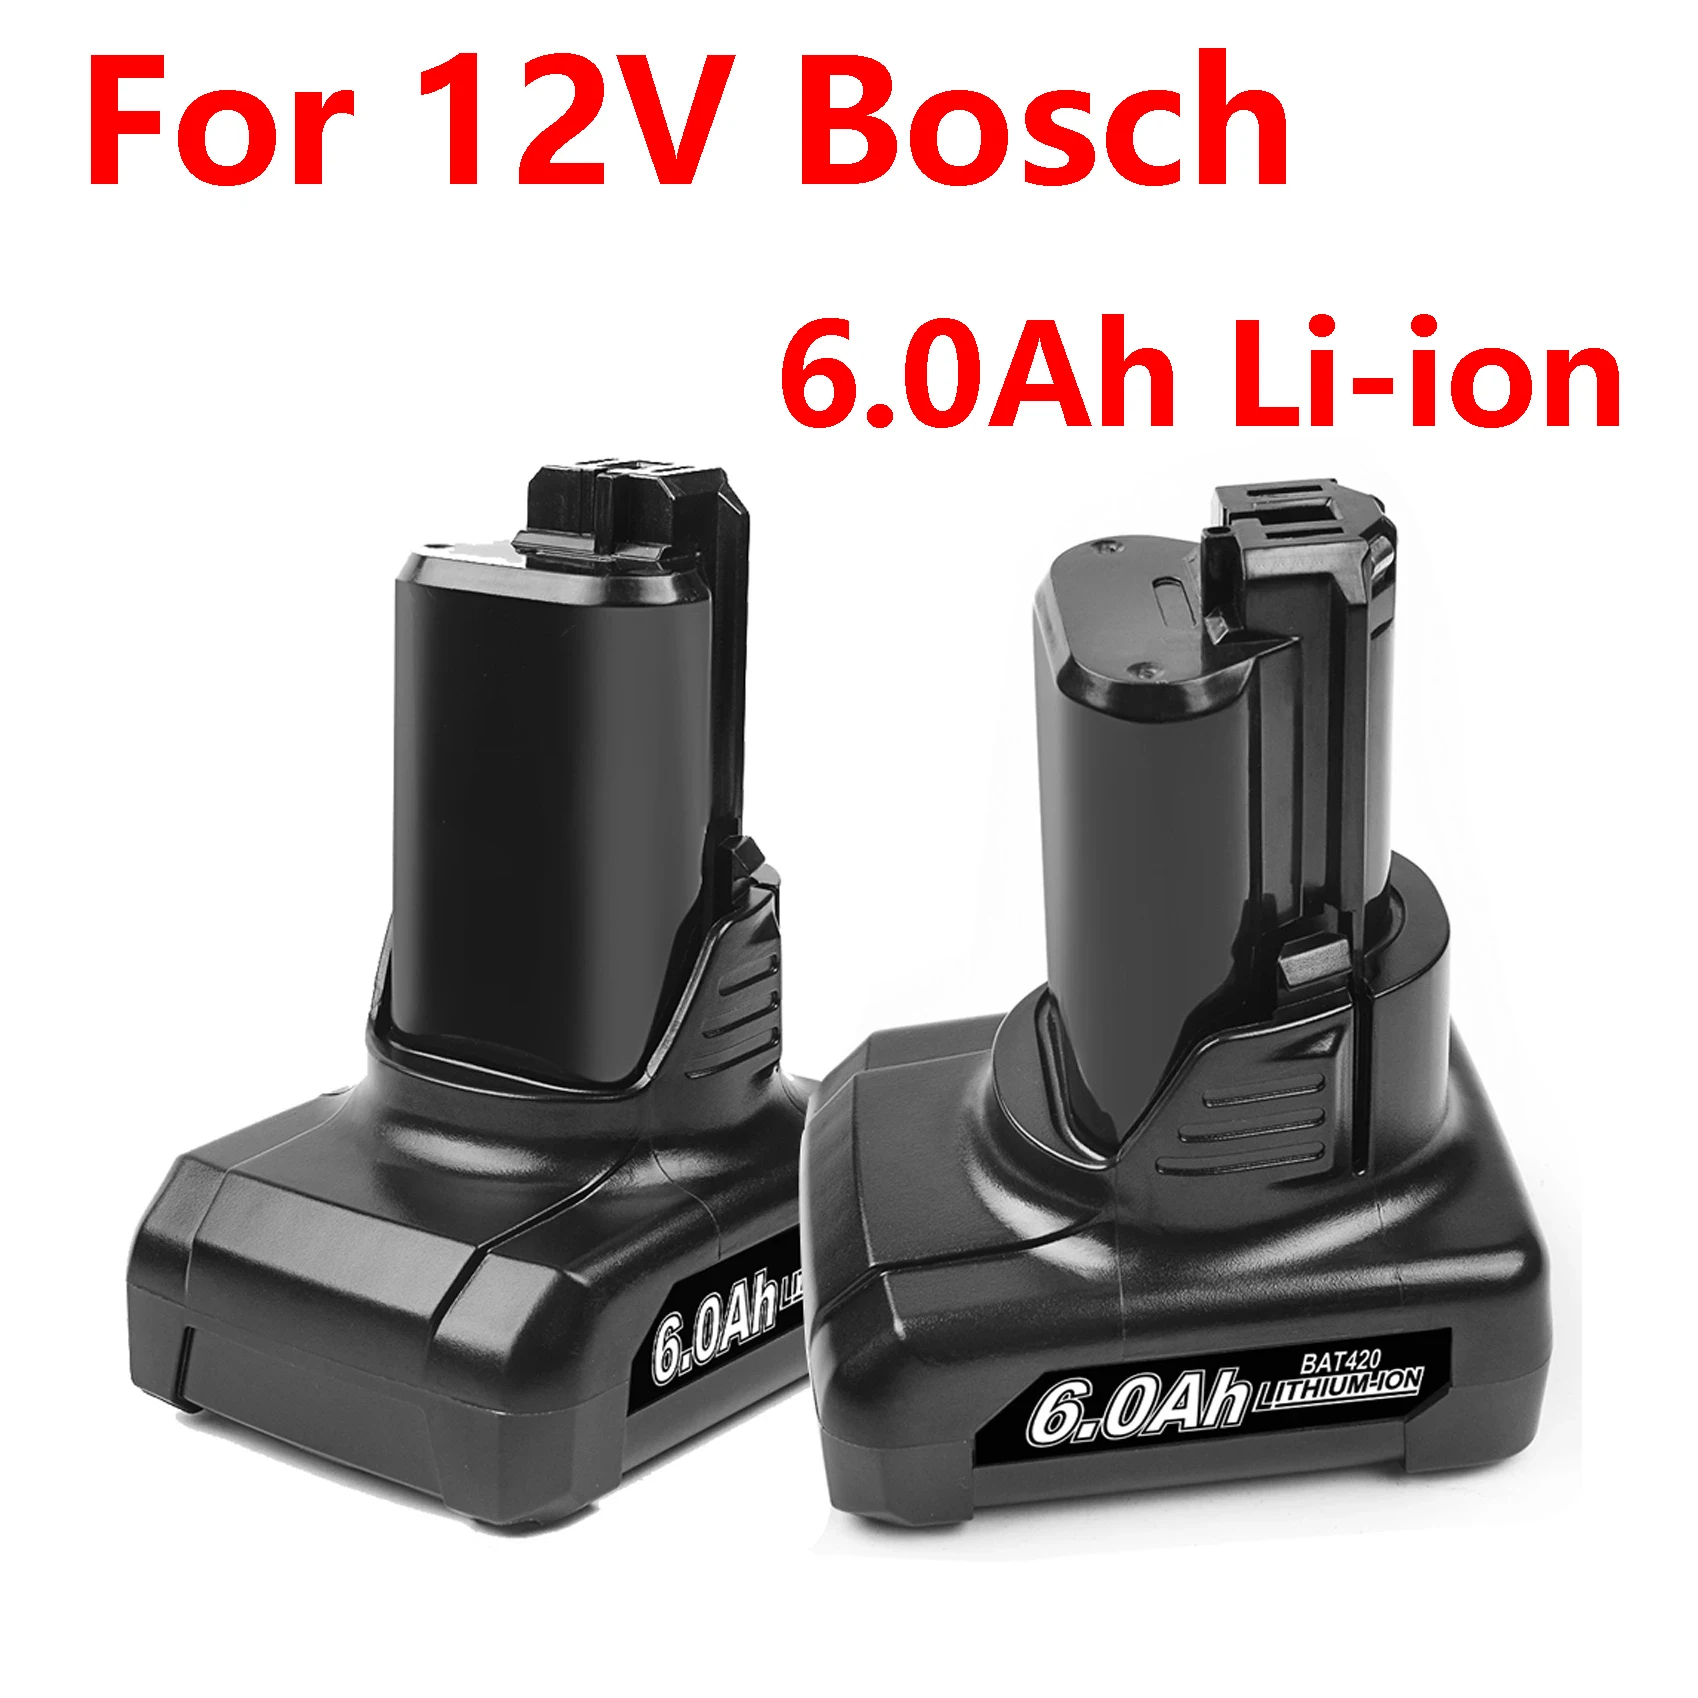 

6.0Ah Li-ion BAT420 12V Bosch Replacement Battery for Bosch BAT411 BAT412 BAT413 BAT414 10.8V Battery Cordless Power Tools